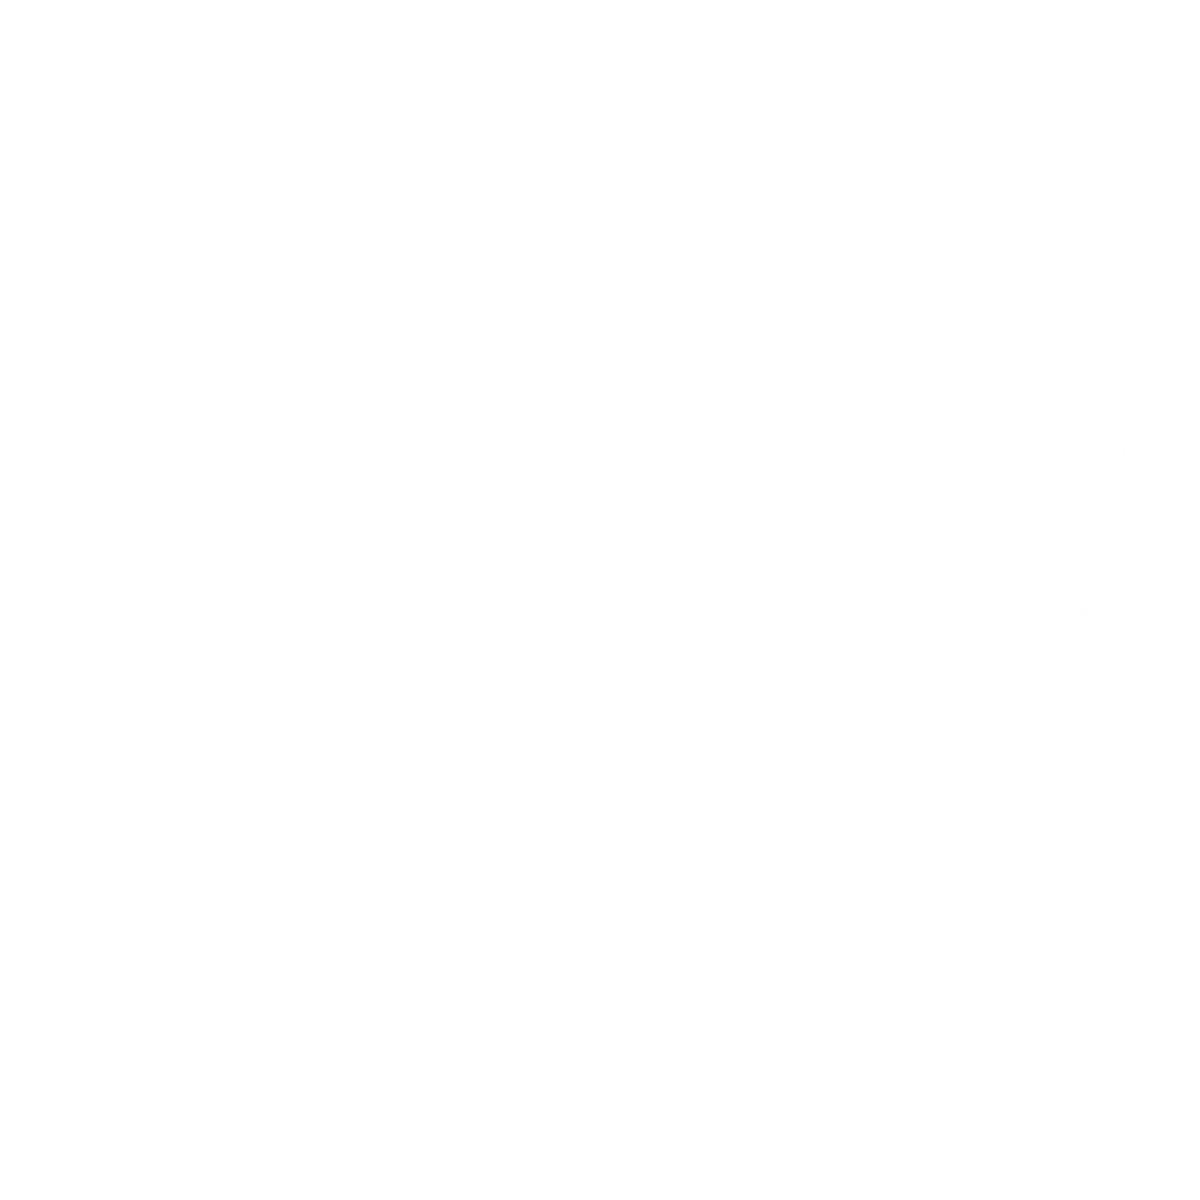 Hamptons-Doc-Fest-2020 test2.png